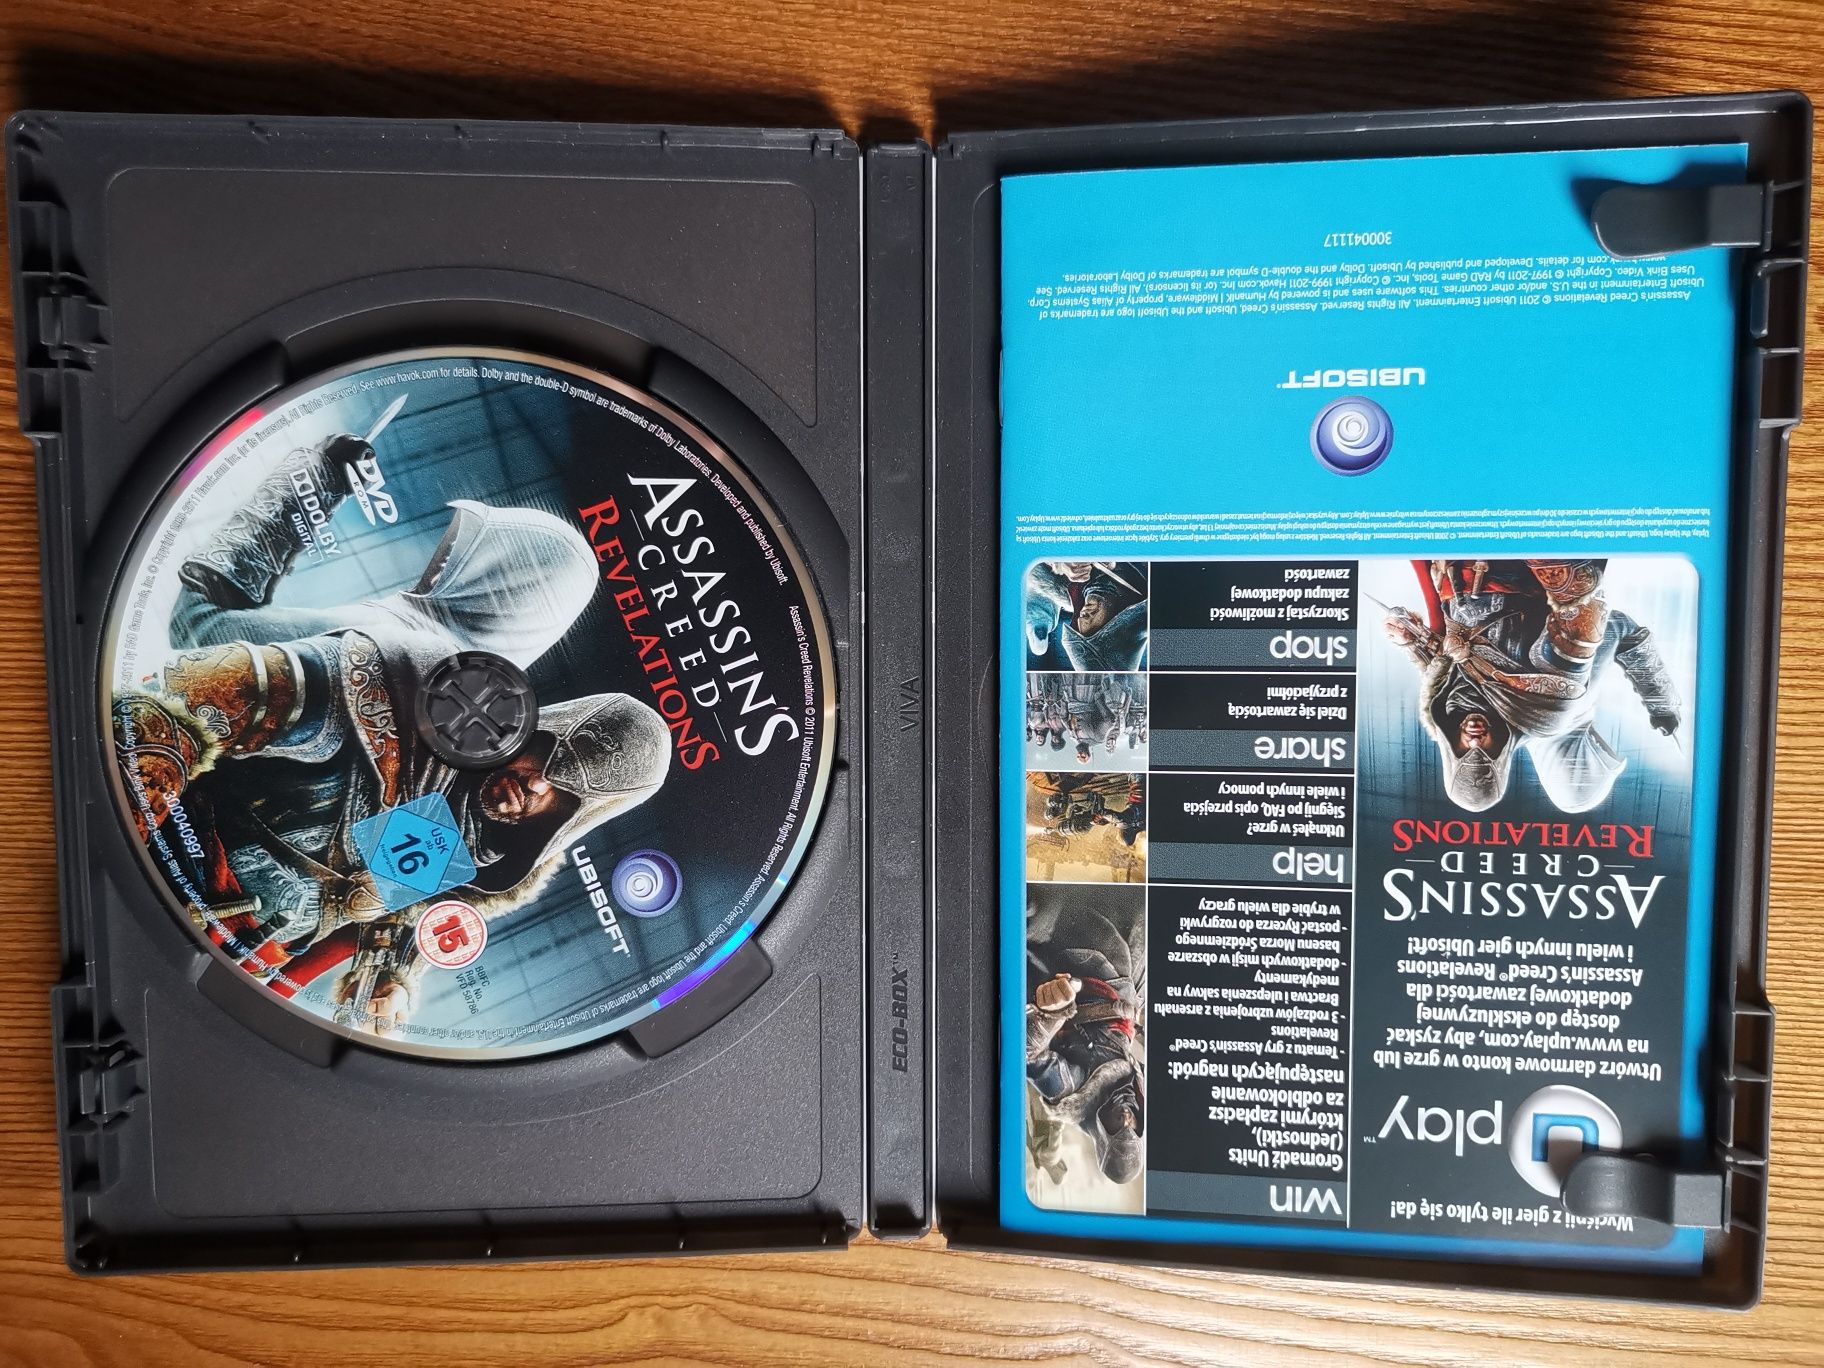 Gra PC - Assassin's Creed Revelations